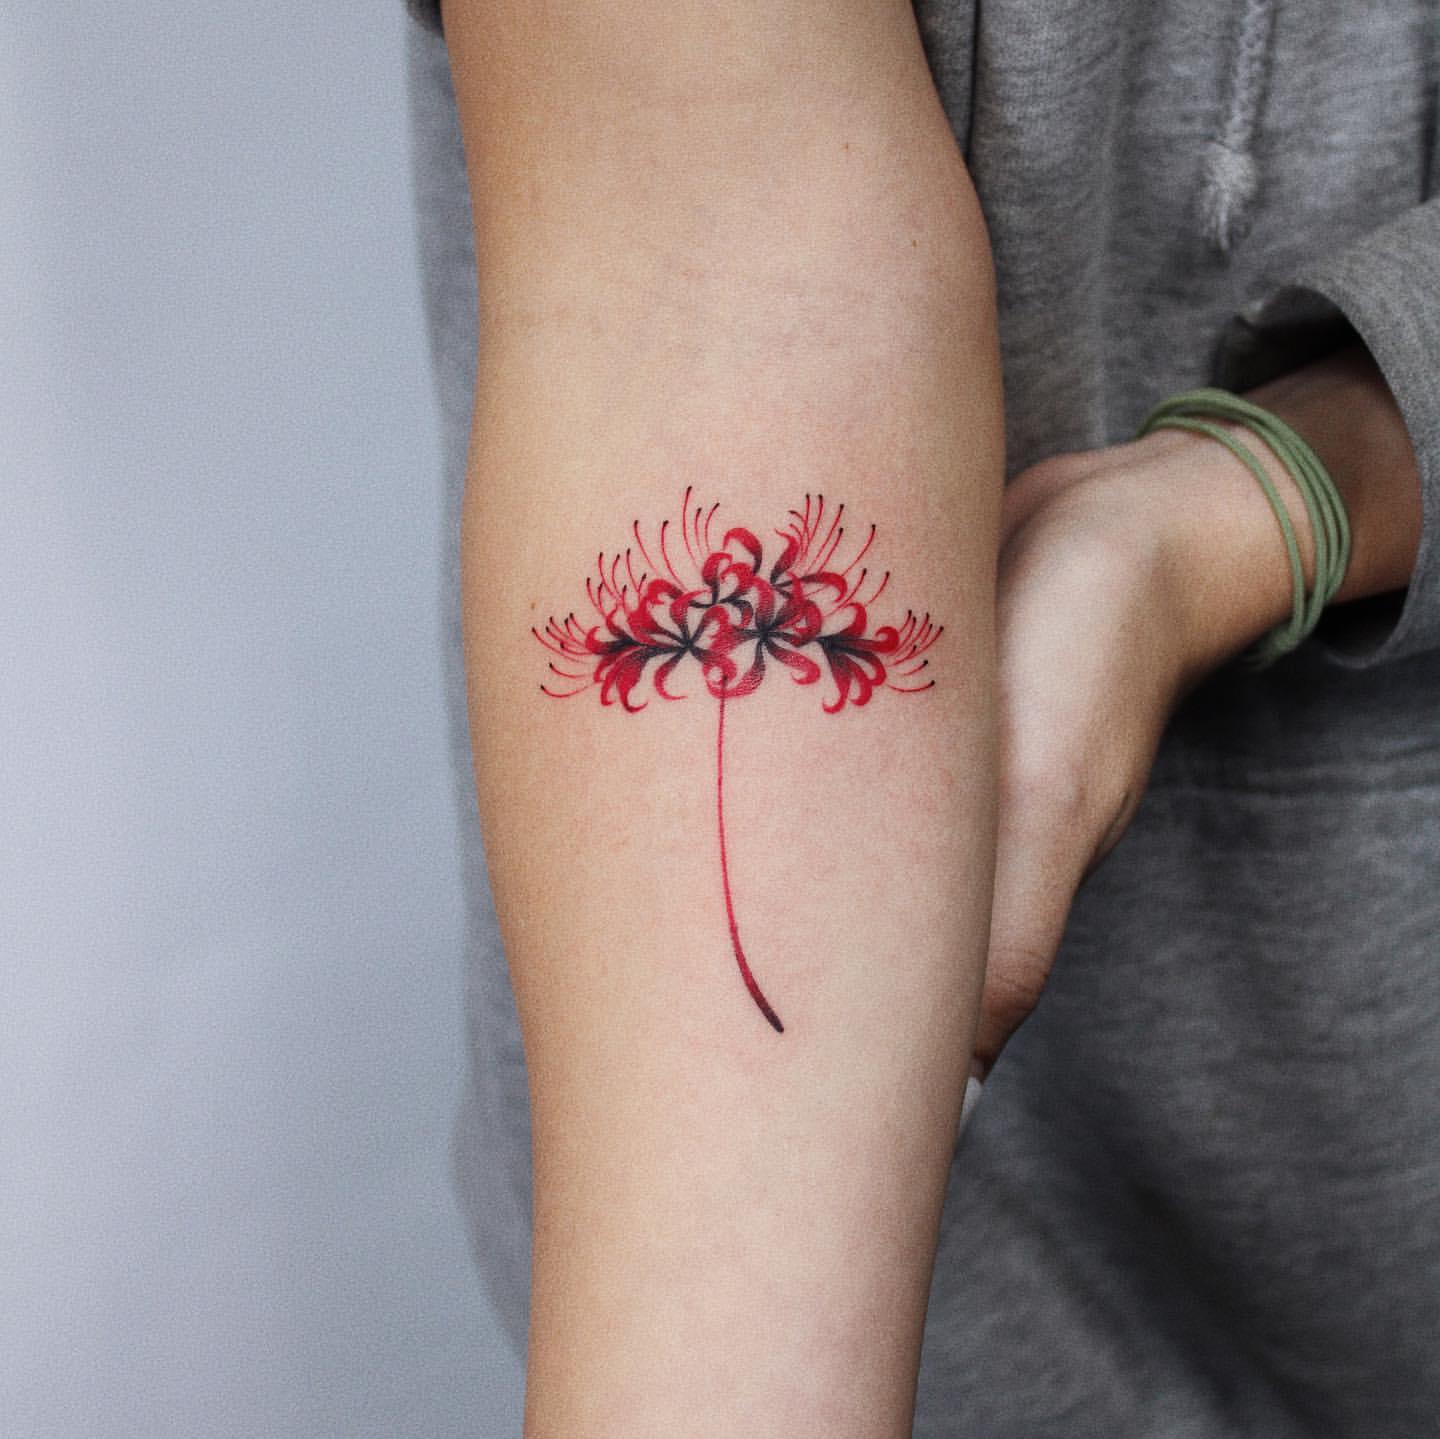 Spider Lily Tattoo Ideas 30